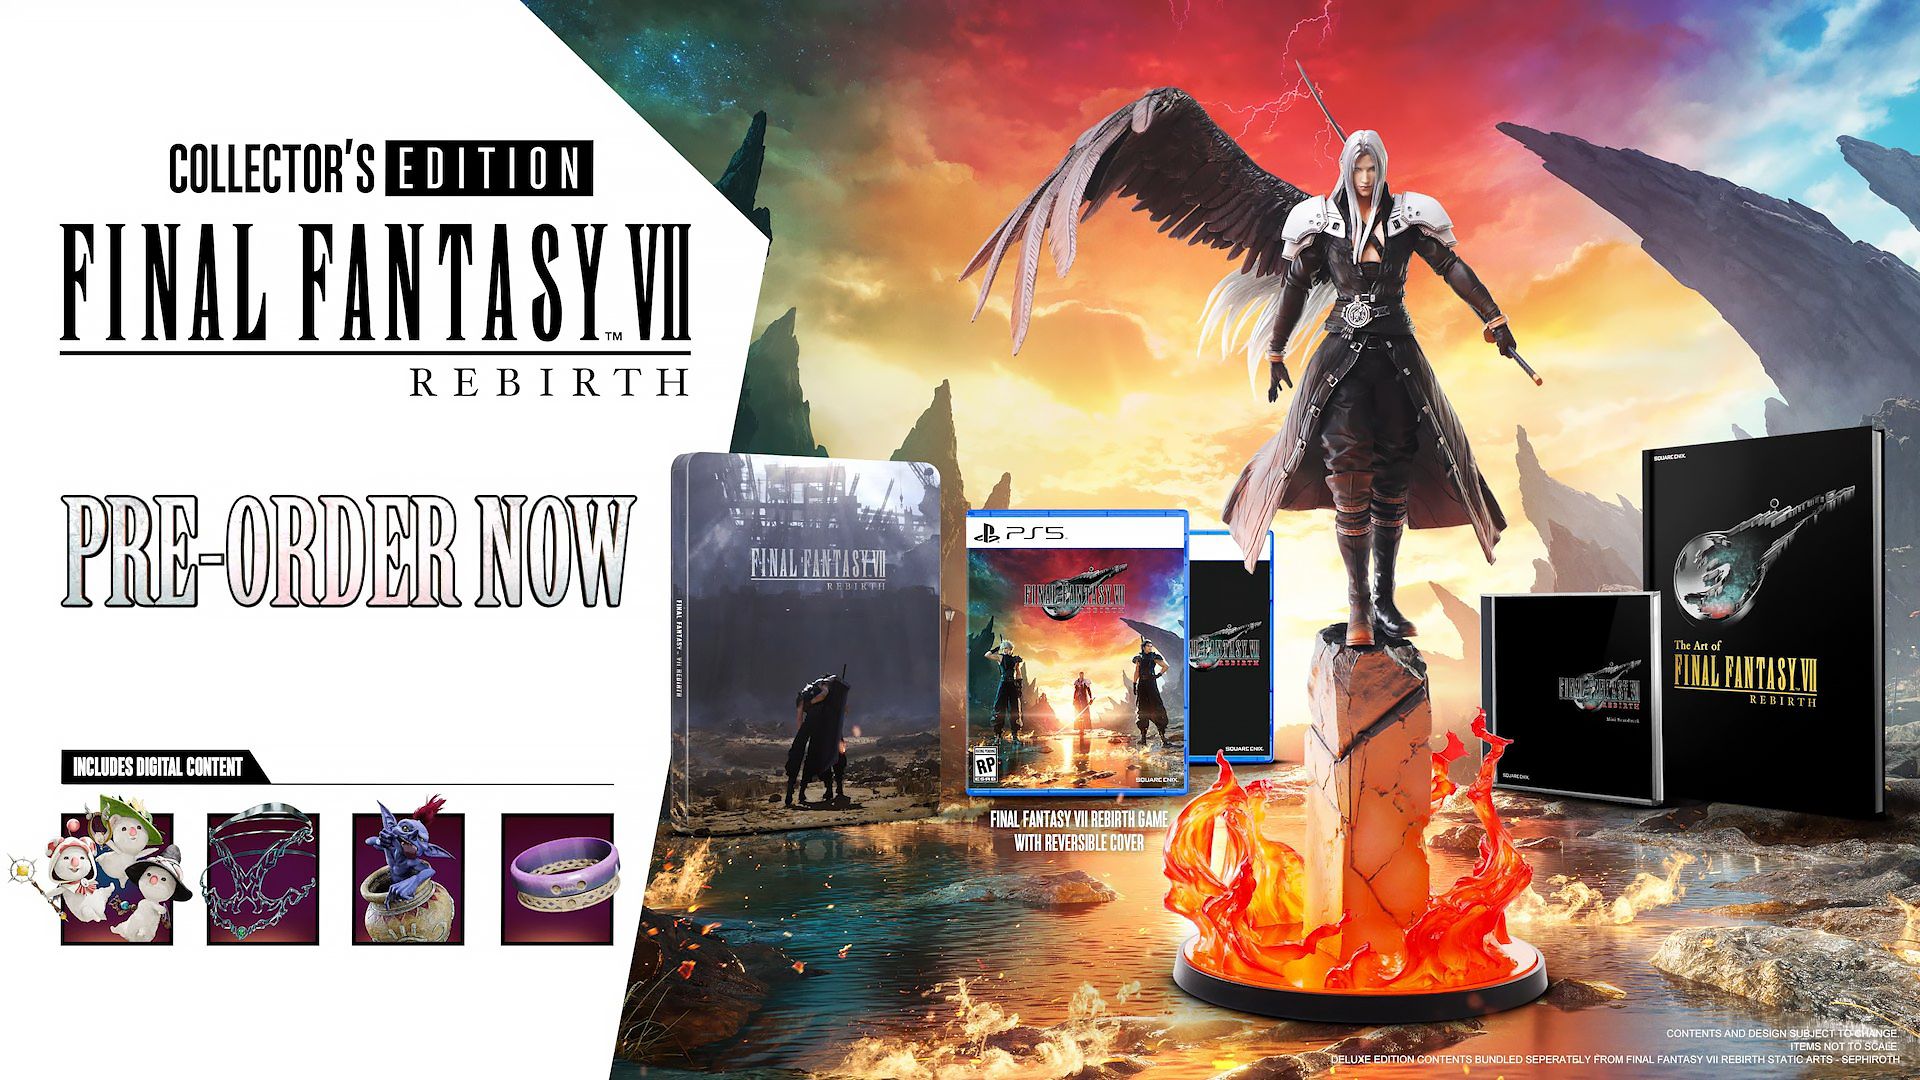 Final Fantasy 7 Collector's Edition Pre-Order Now Graphic